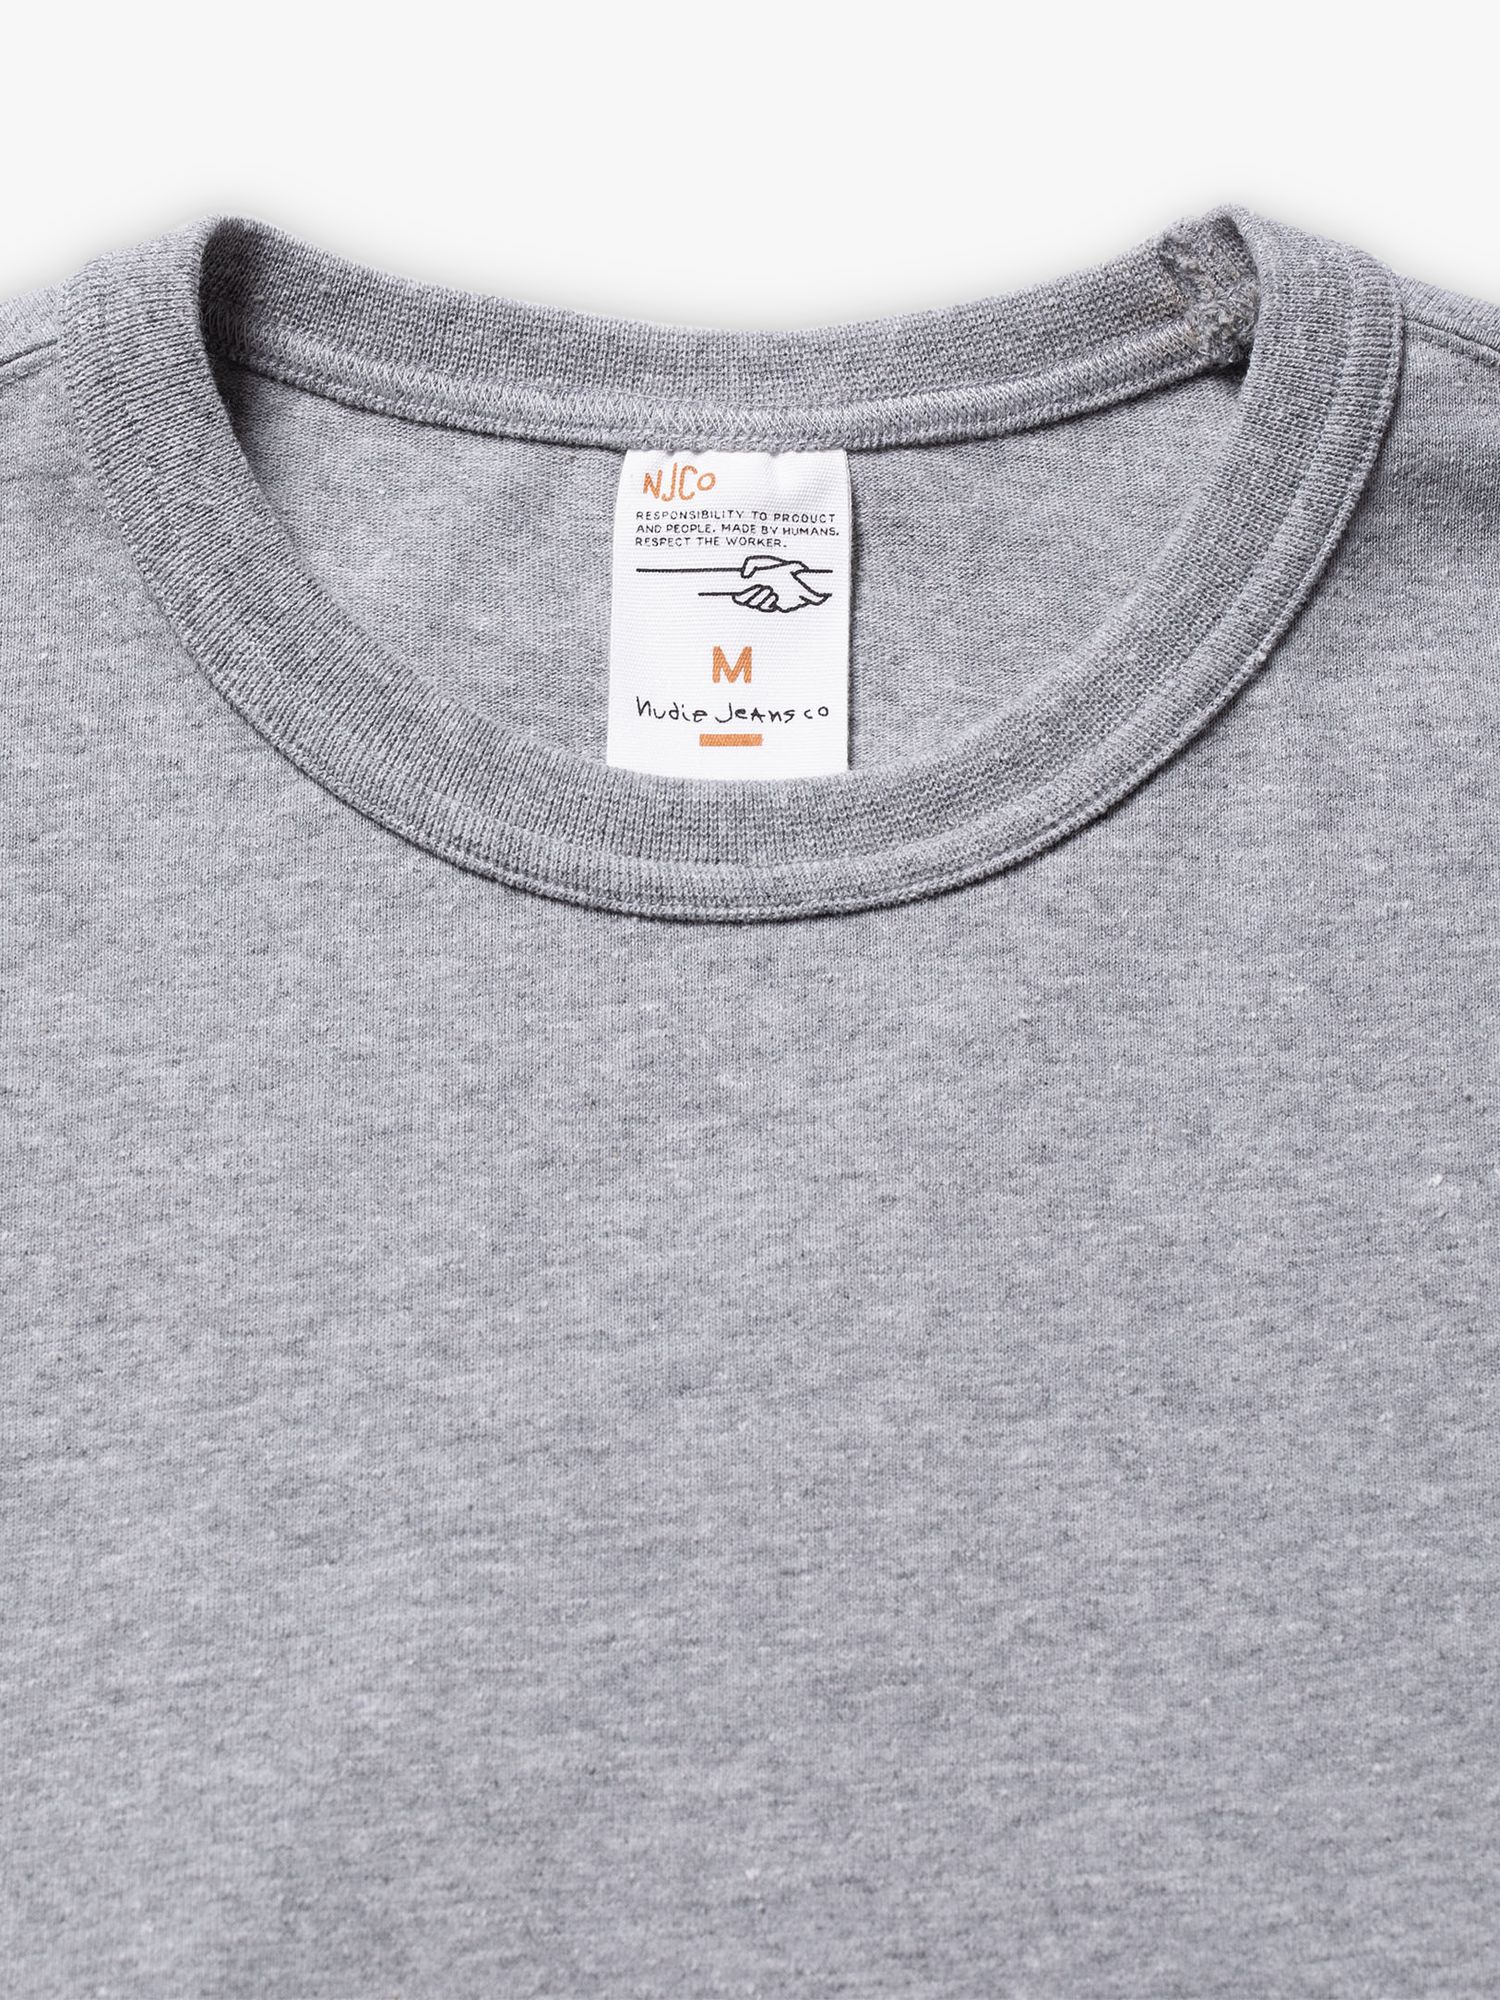 Nudie Jeans Rebirth Pin Logo T-Shirt, Grey at John Lewis & Partners